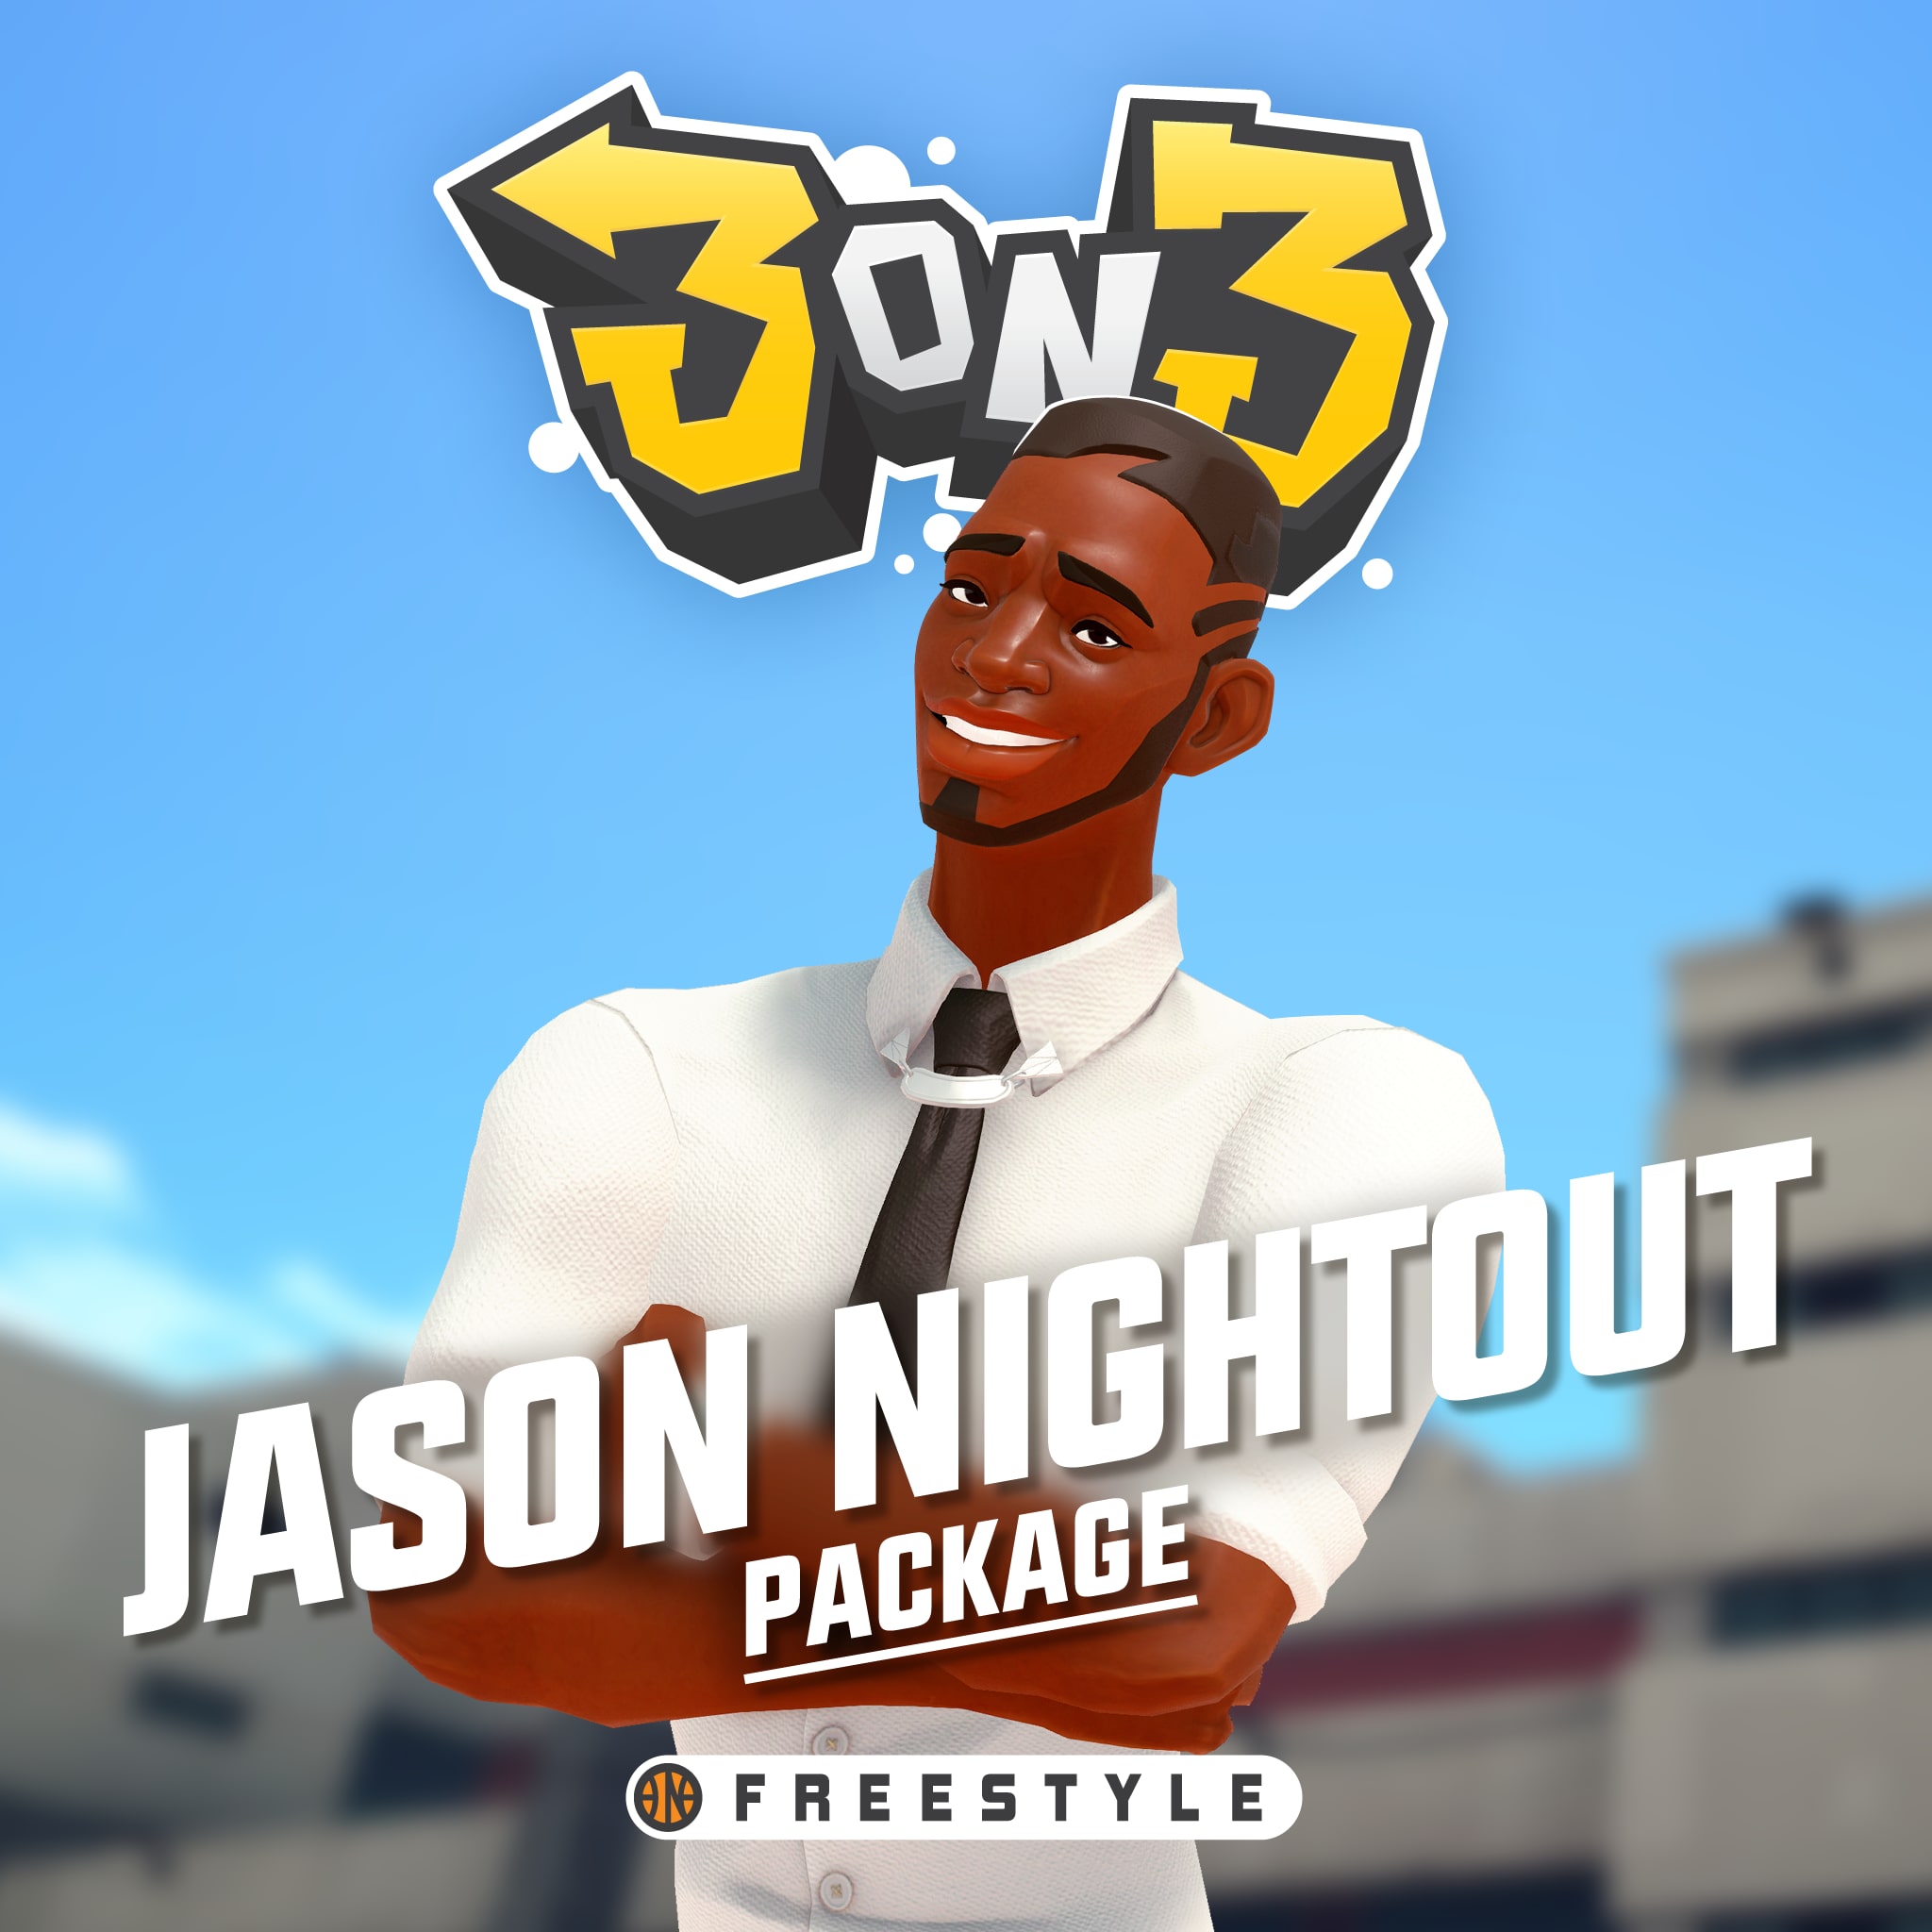 3on3 FreeStyle - Jason gece paketi